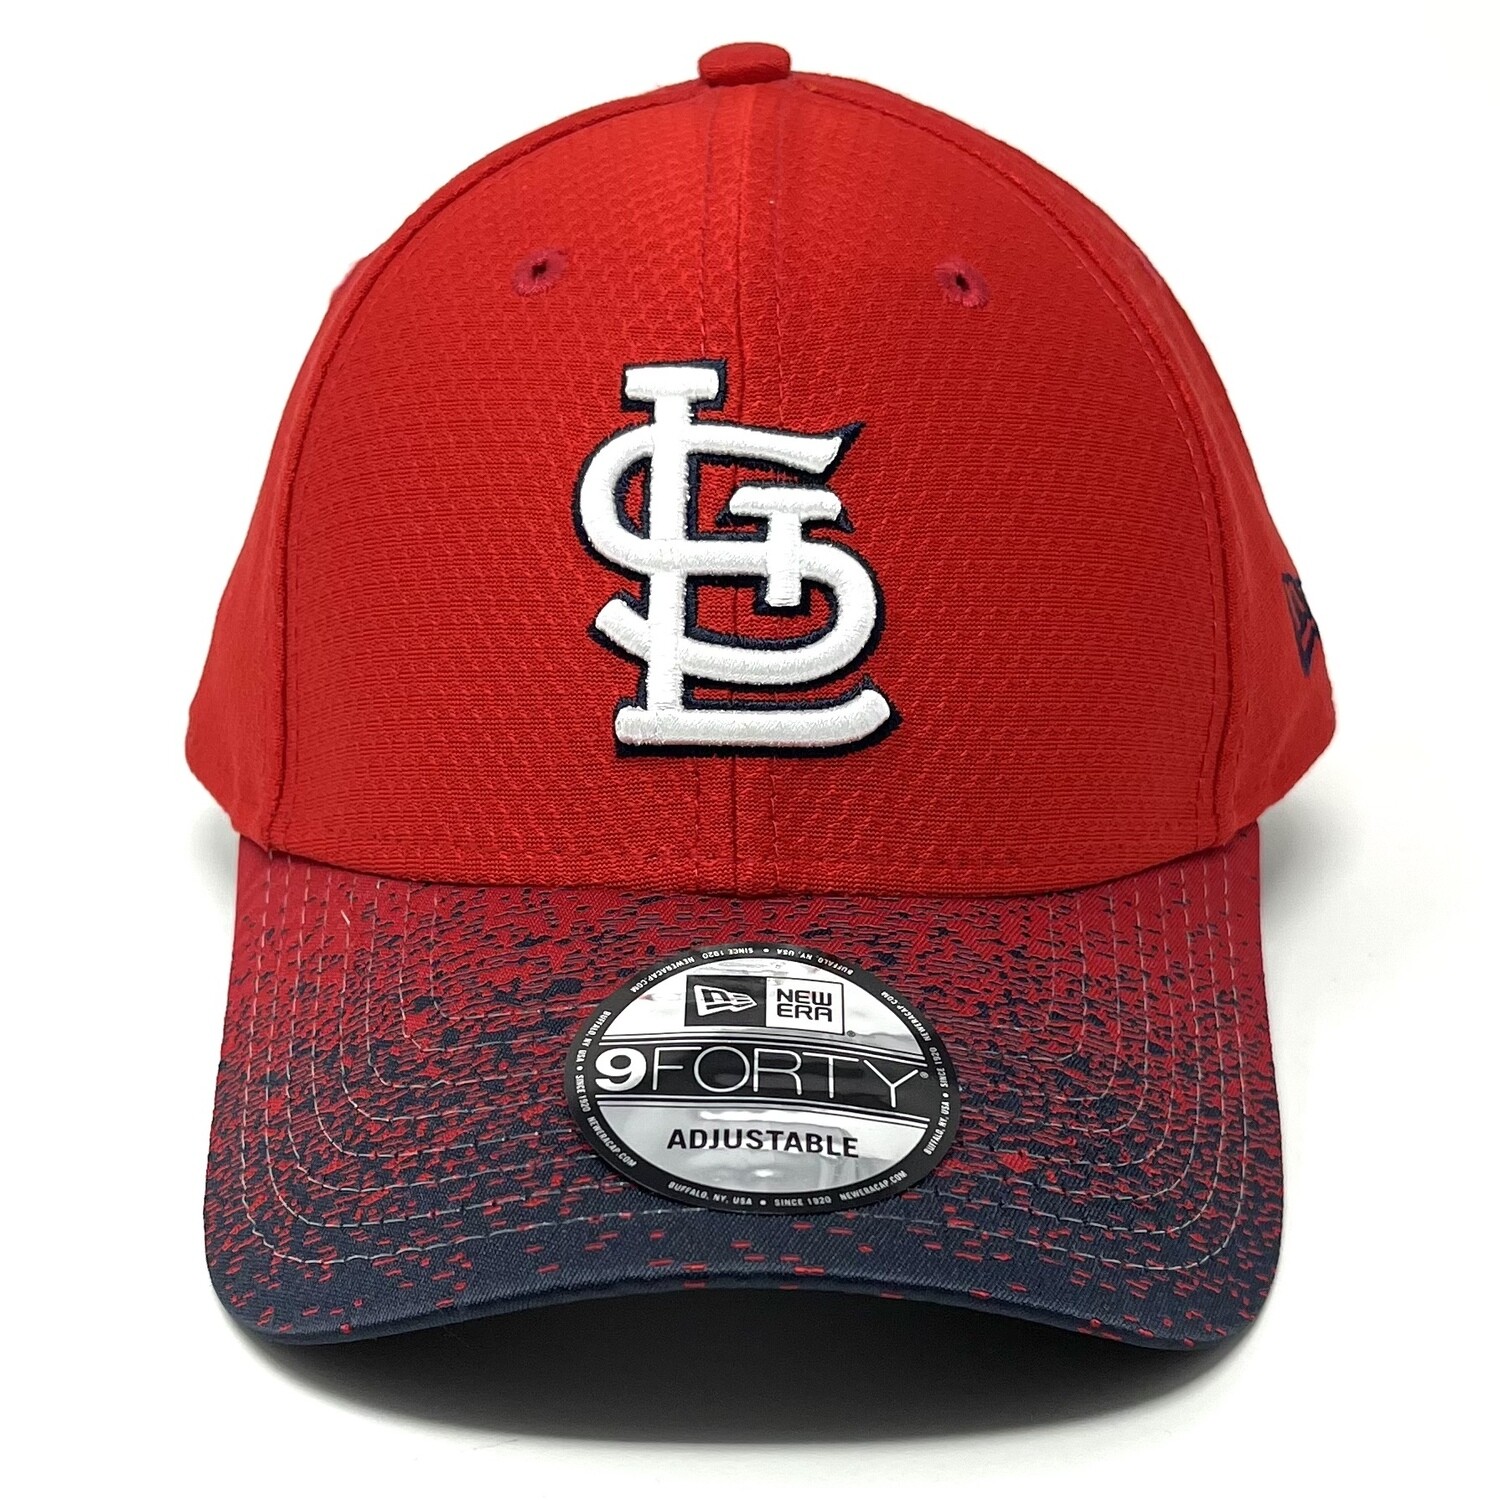 St Louis Cardinals - New Era 9Forty Adjustable Cap